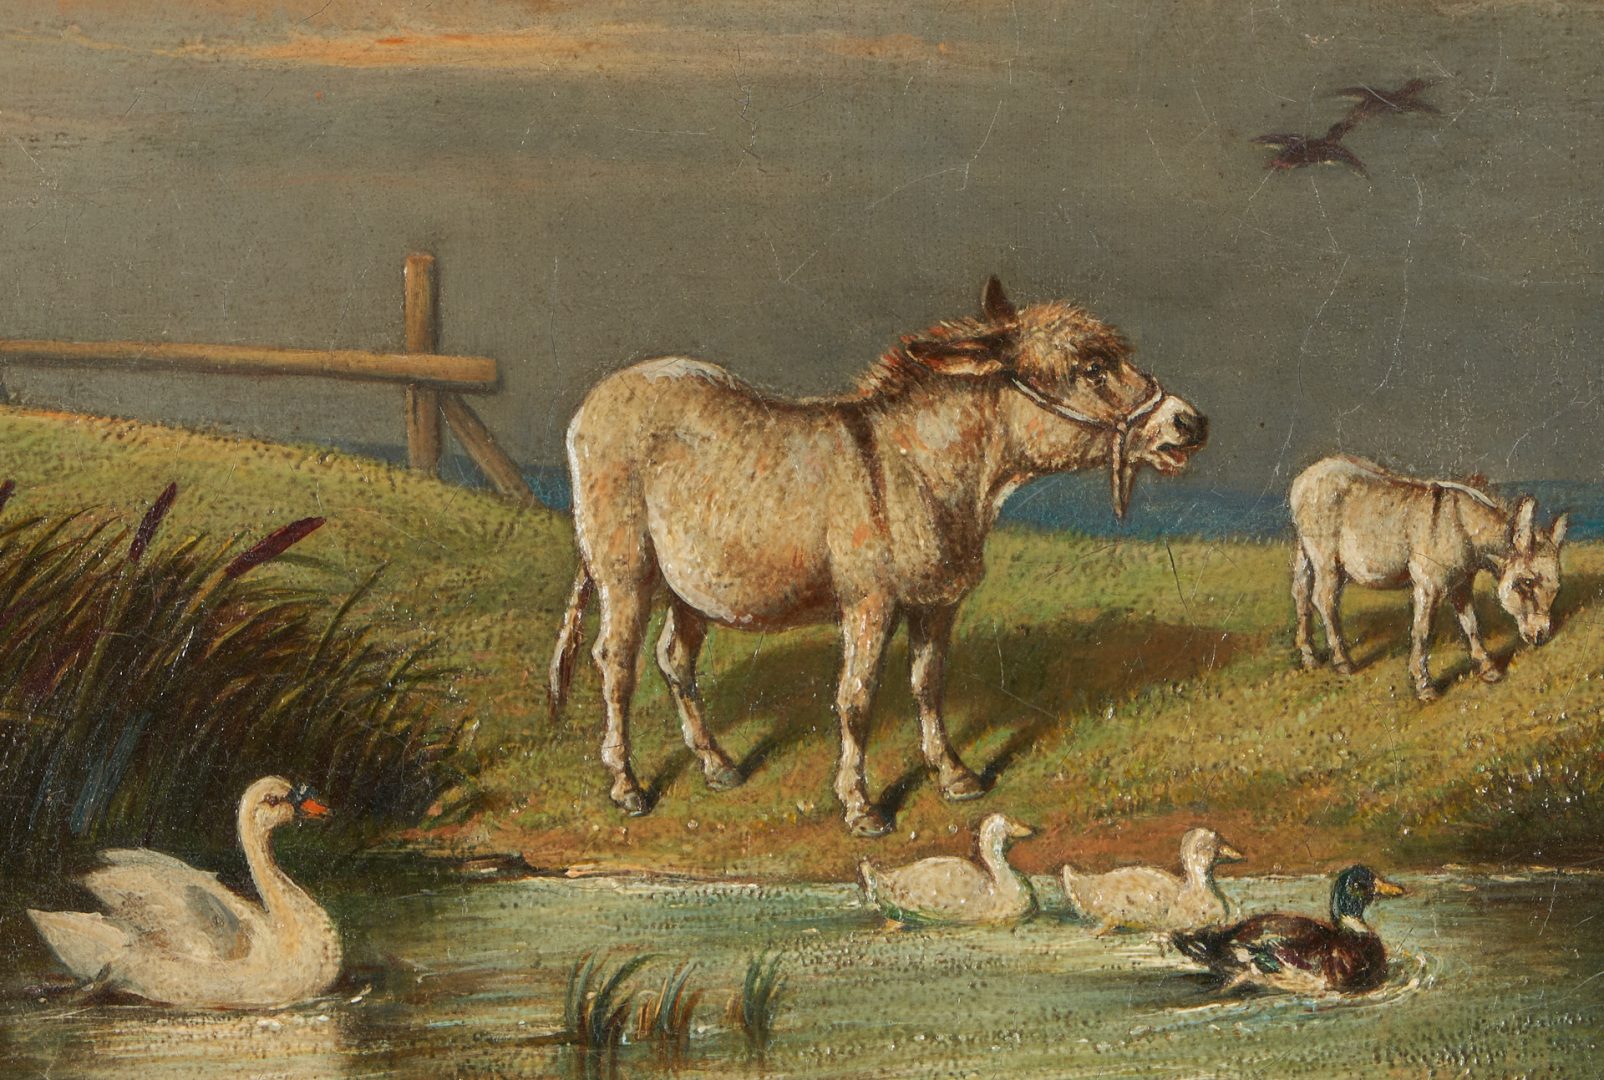 Lot 262: Edward Lloyd O/C Landscape Painting w/ Swan, Ducks, & Donkeys